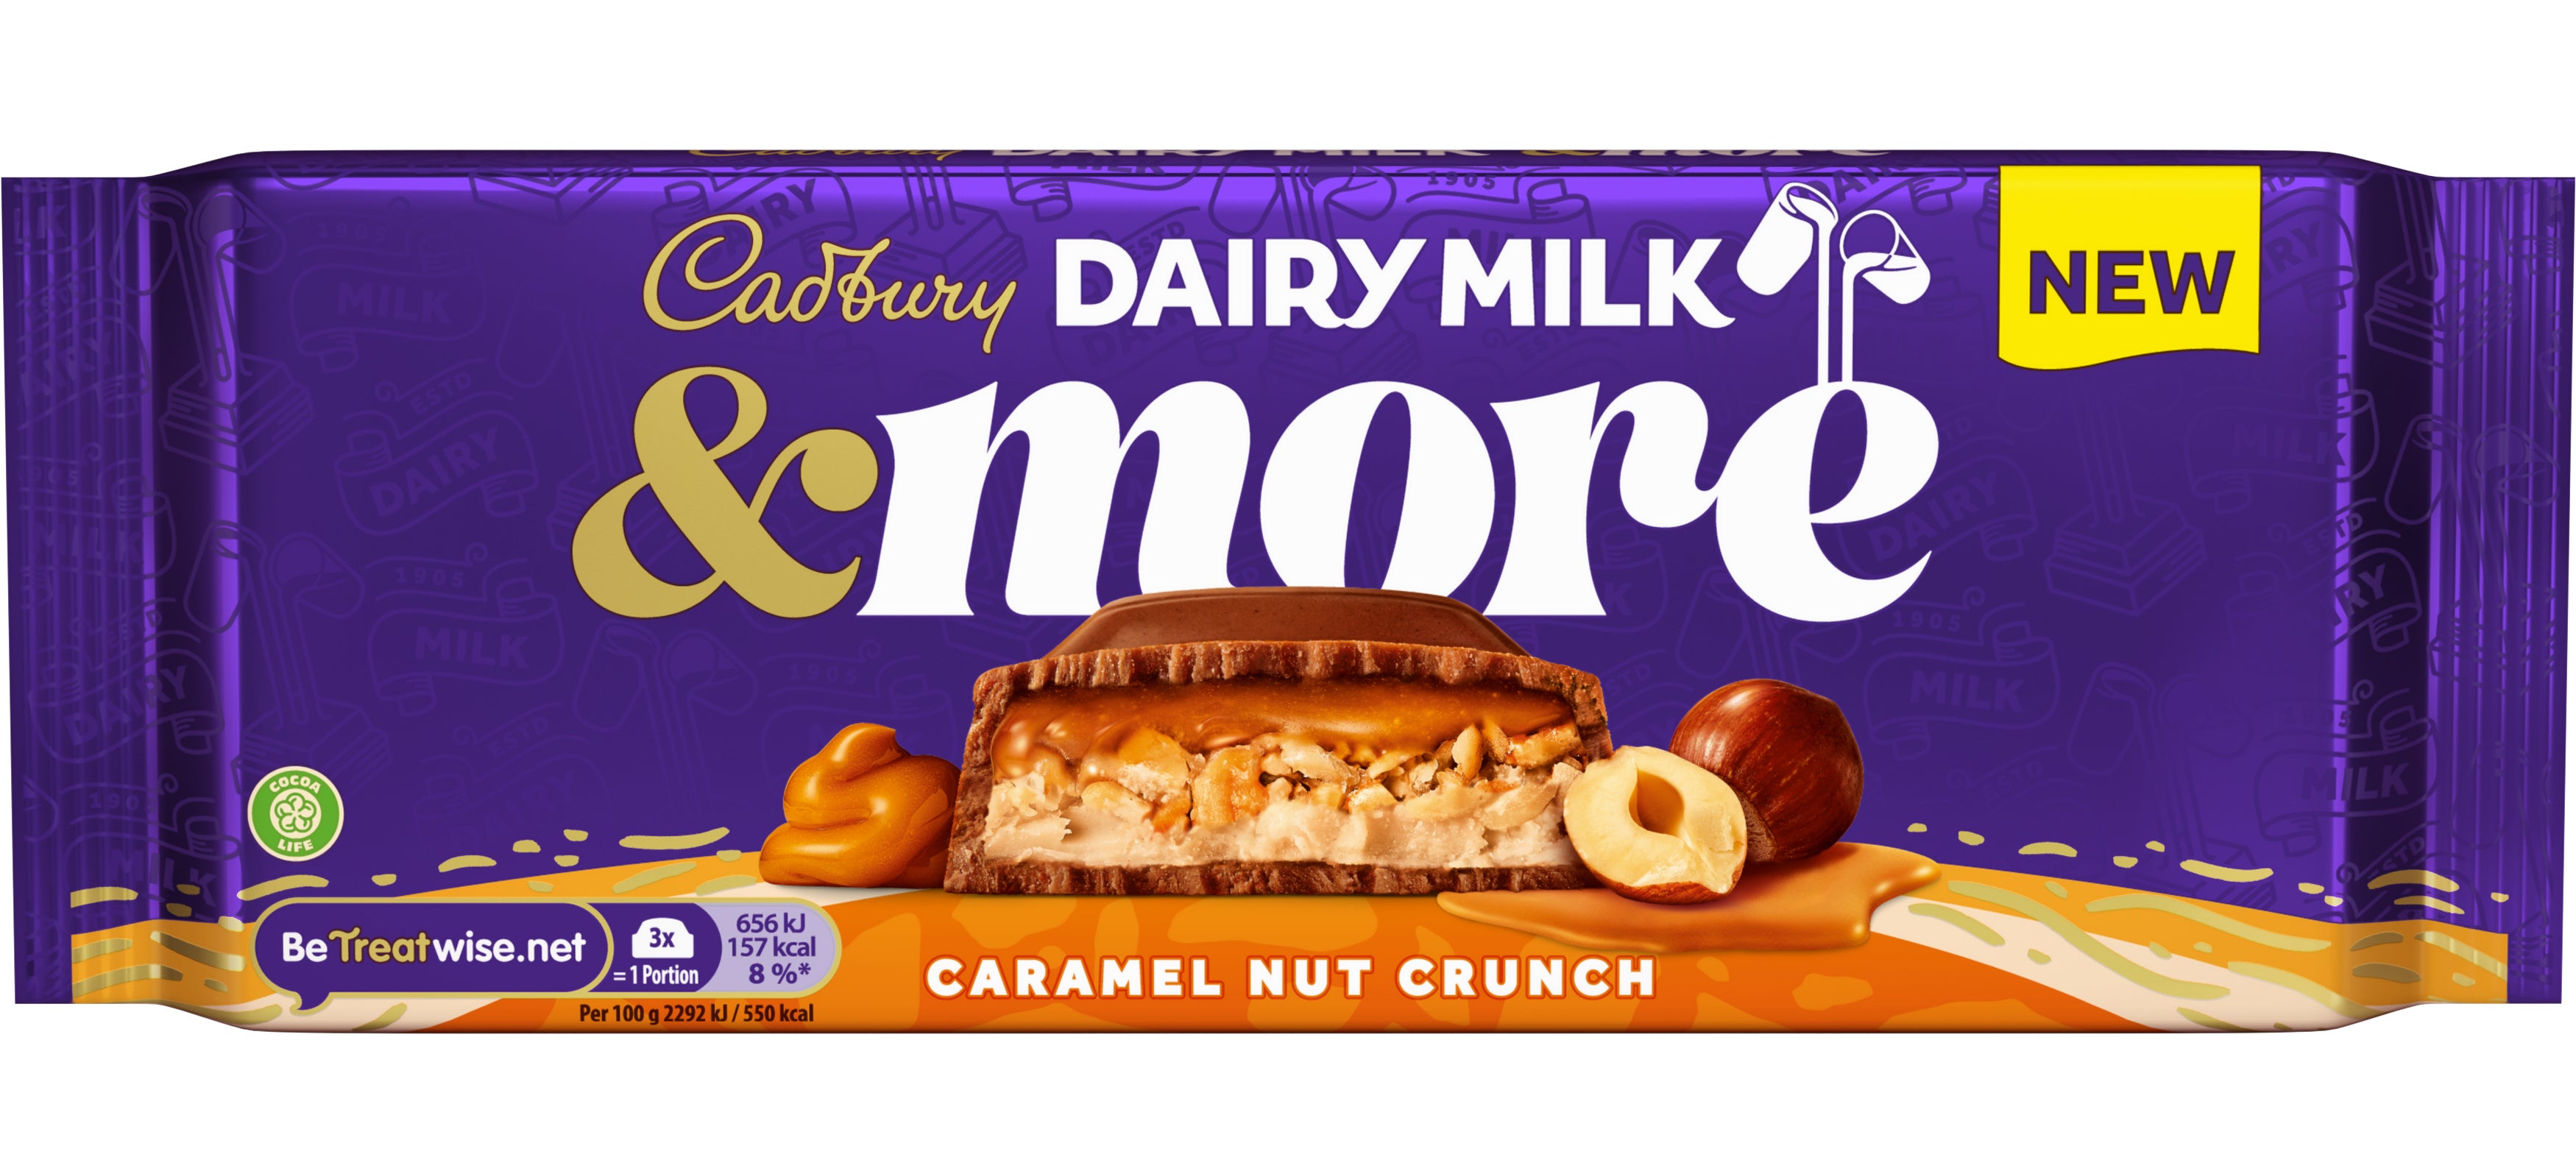 Cadbury’s Caramel Nut Crunch bar